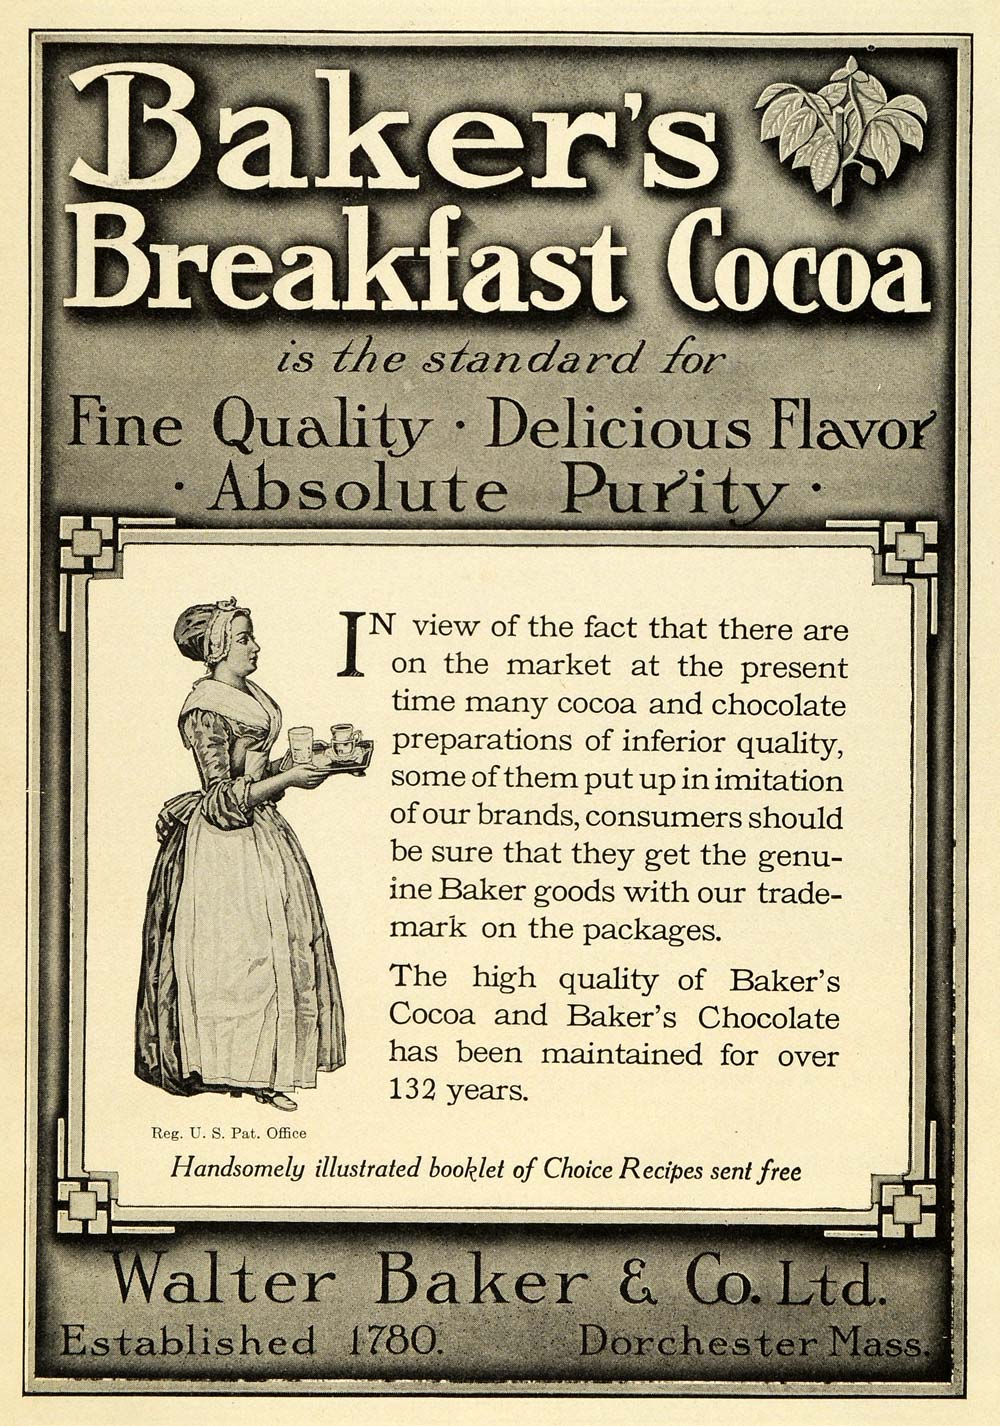 1912 Ad Walter Baker Baking Breakfast Cocoa Chocolate Maid Trademark Logo PM3